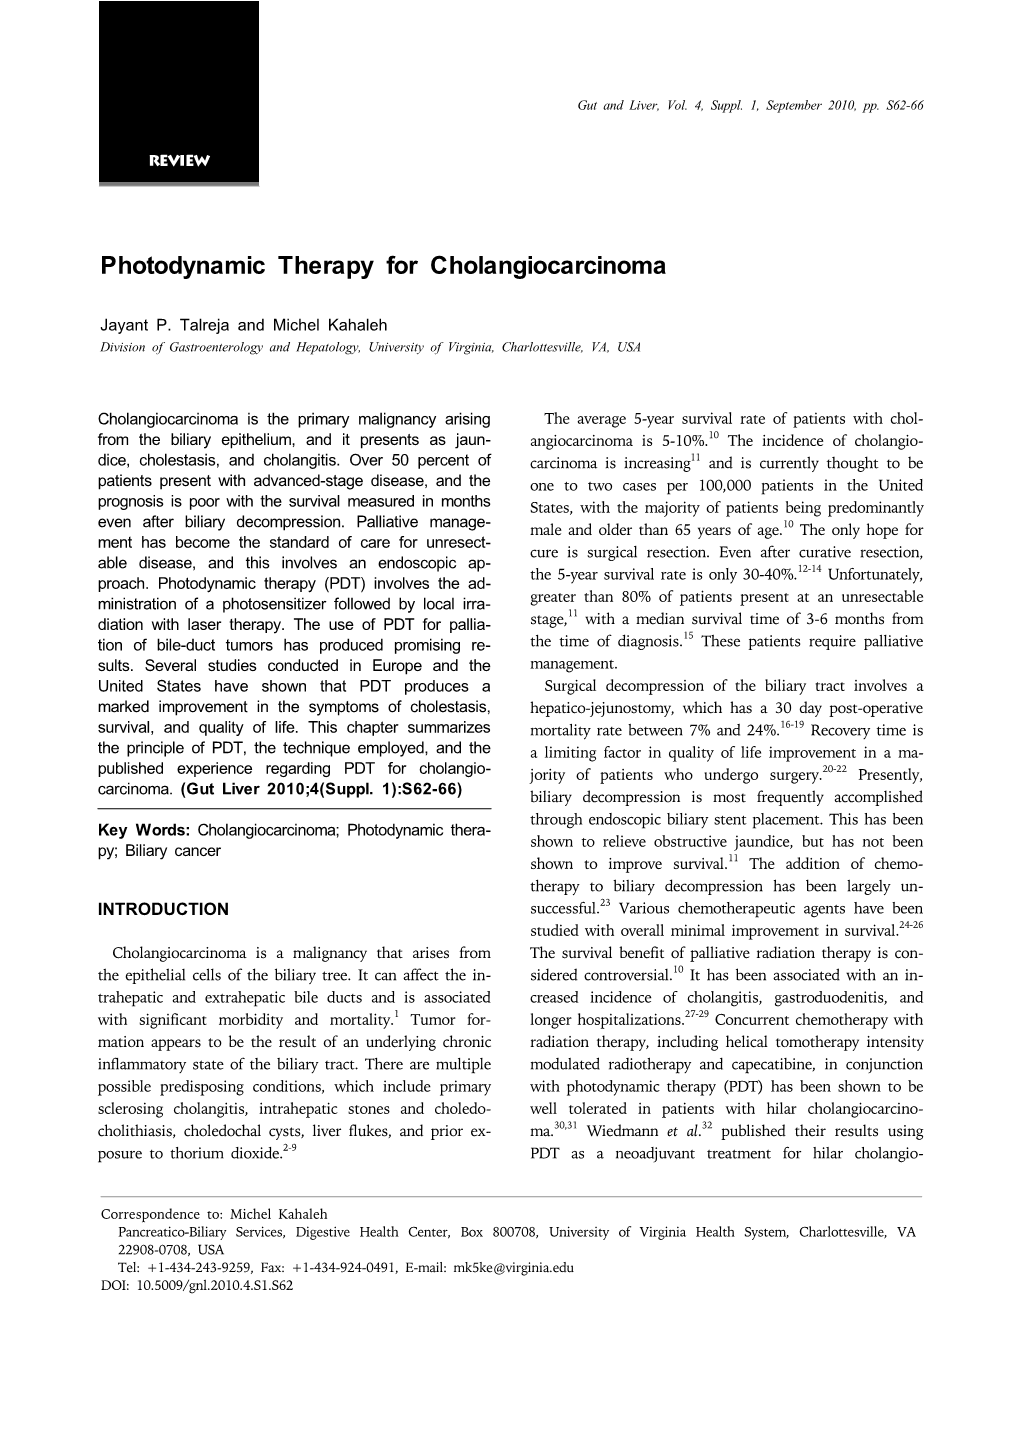 Photodynamic Therapy for Cholangiocarcinoma